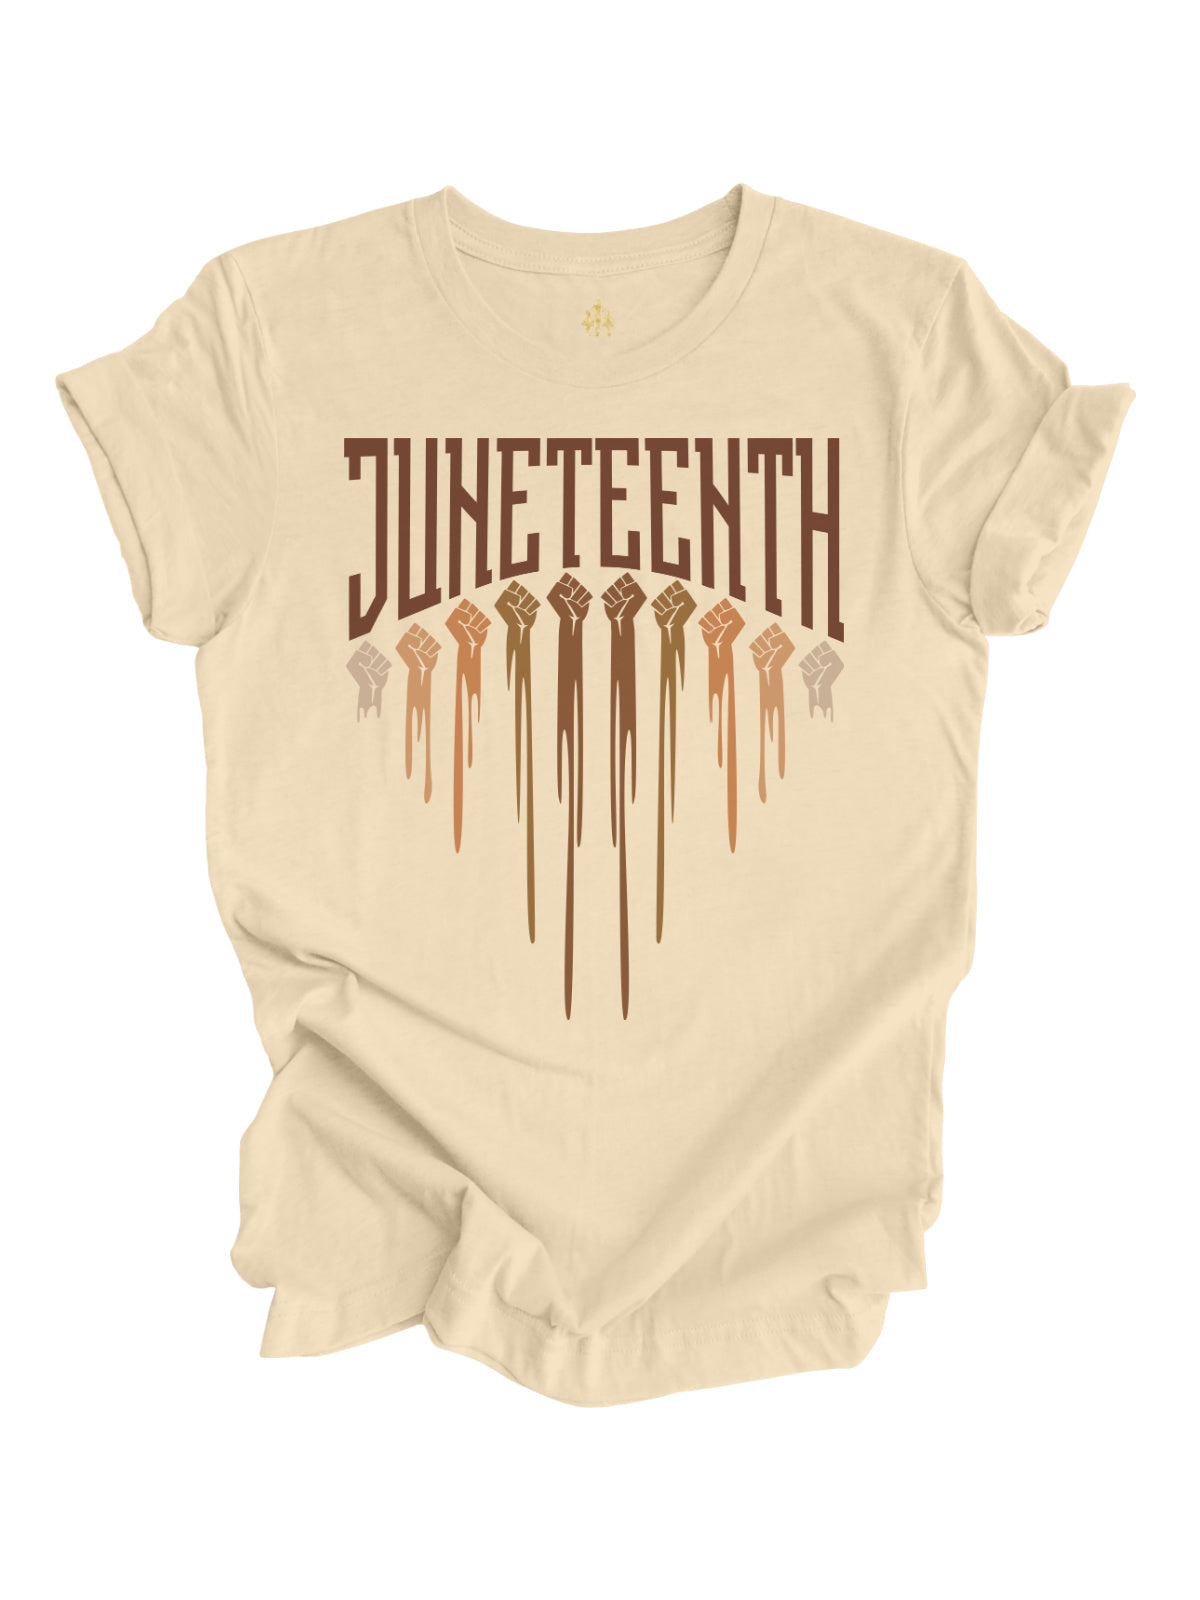 Juneteenth Fists Adult Shirt in Soft Cream